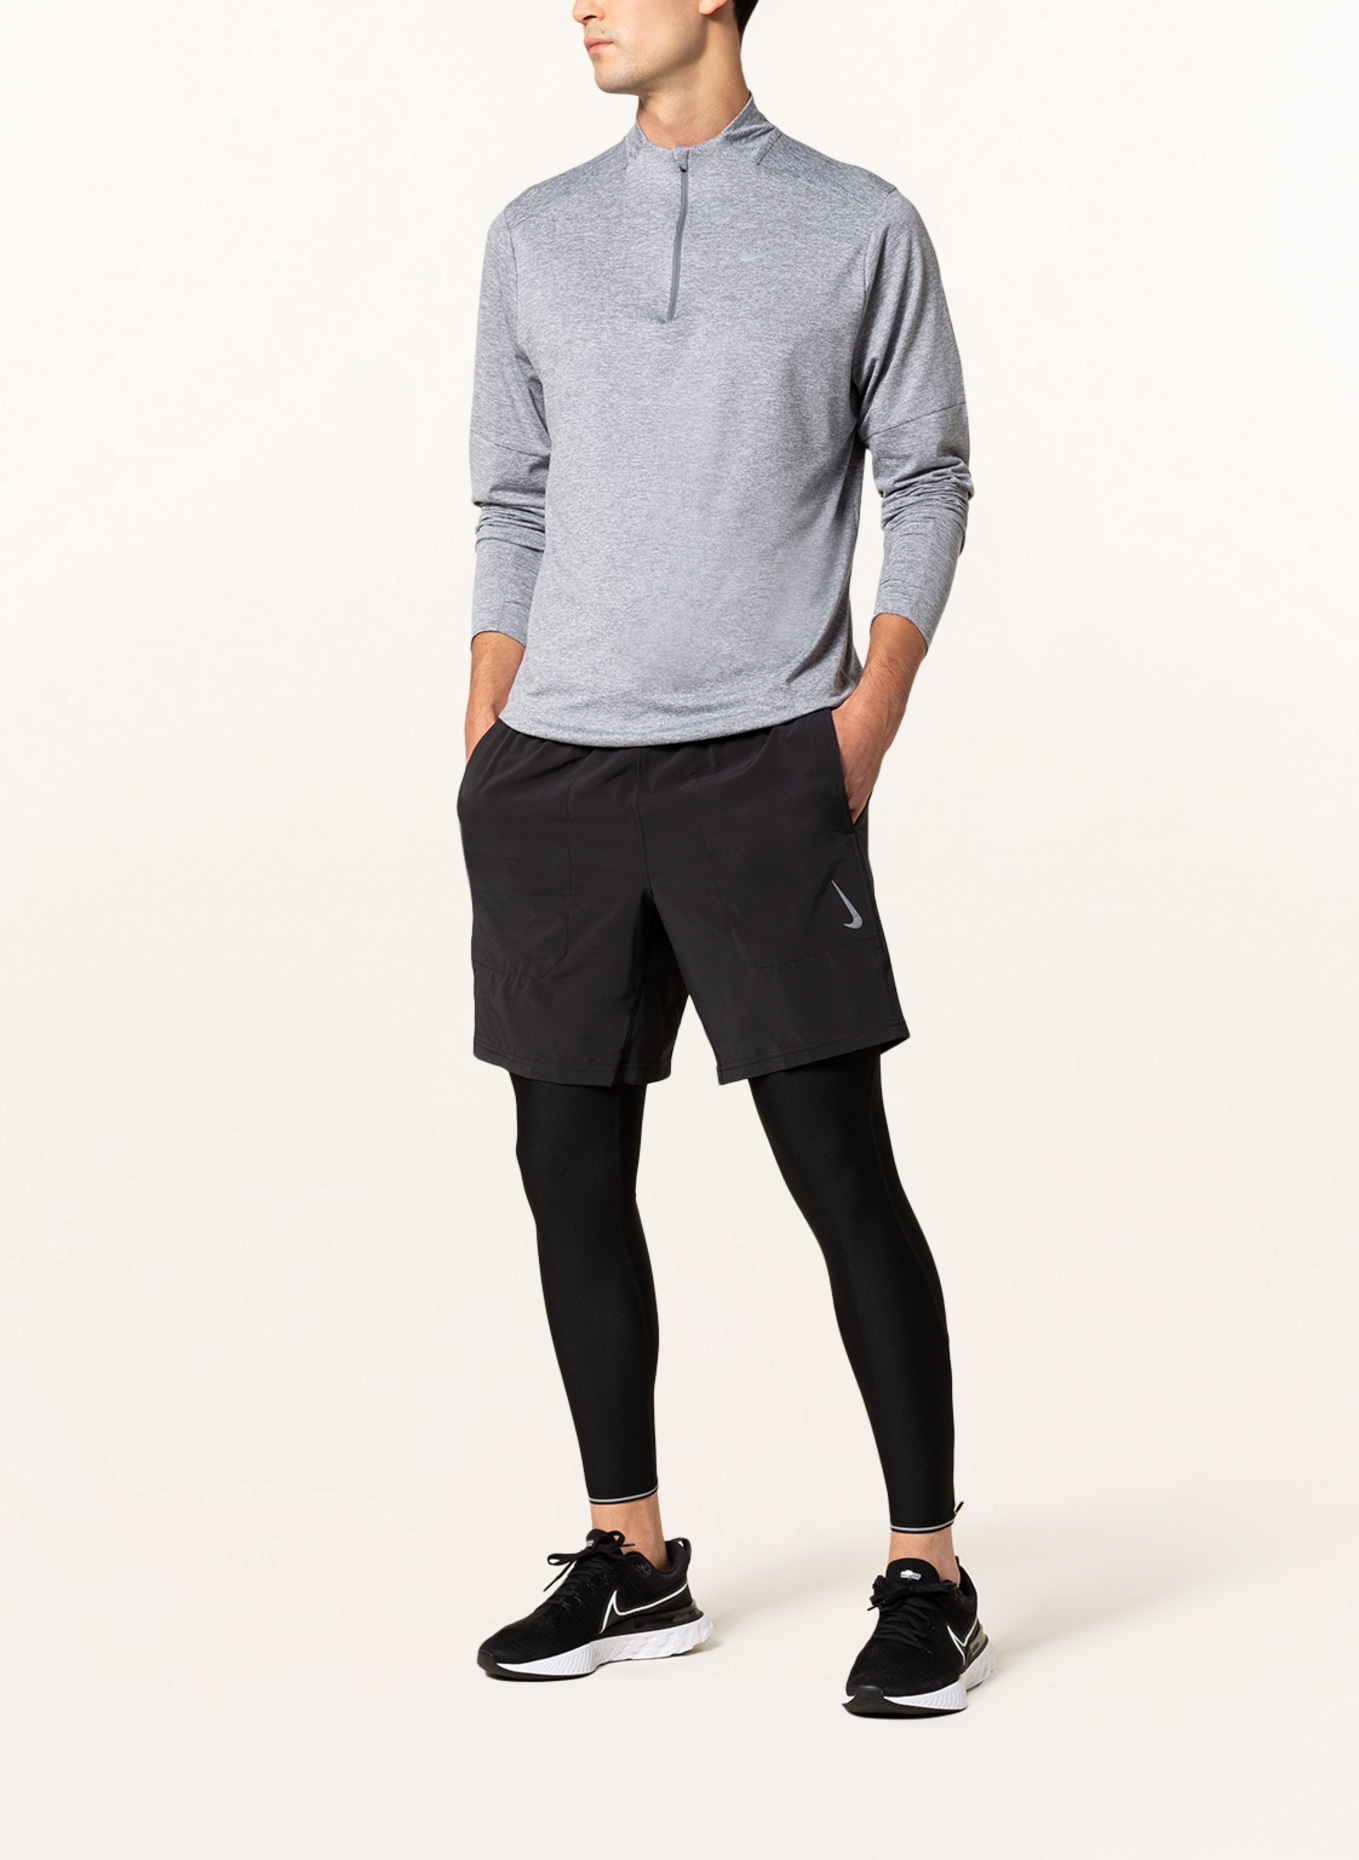 Nike Running shirt DRI-FIT ELEMENT, Color: LIGHT GRAY (Image 2)